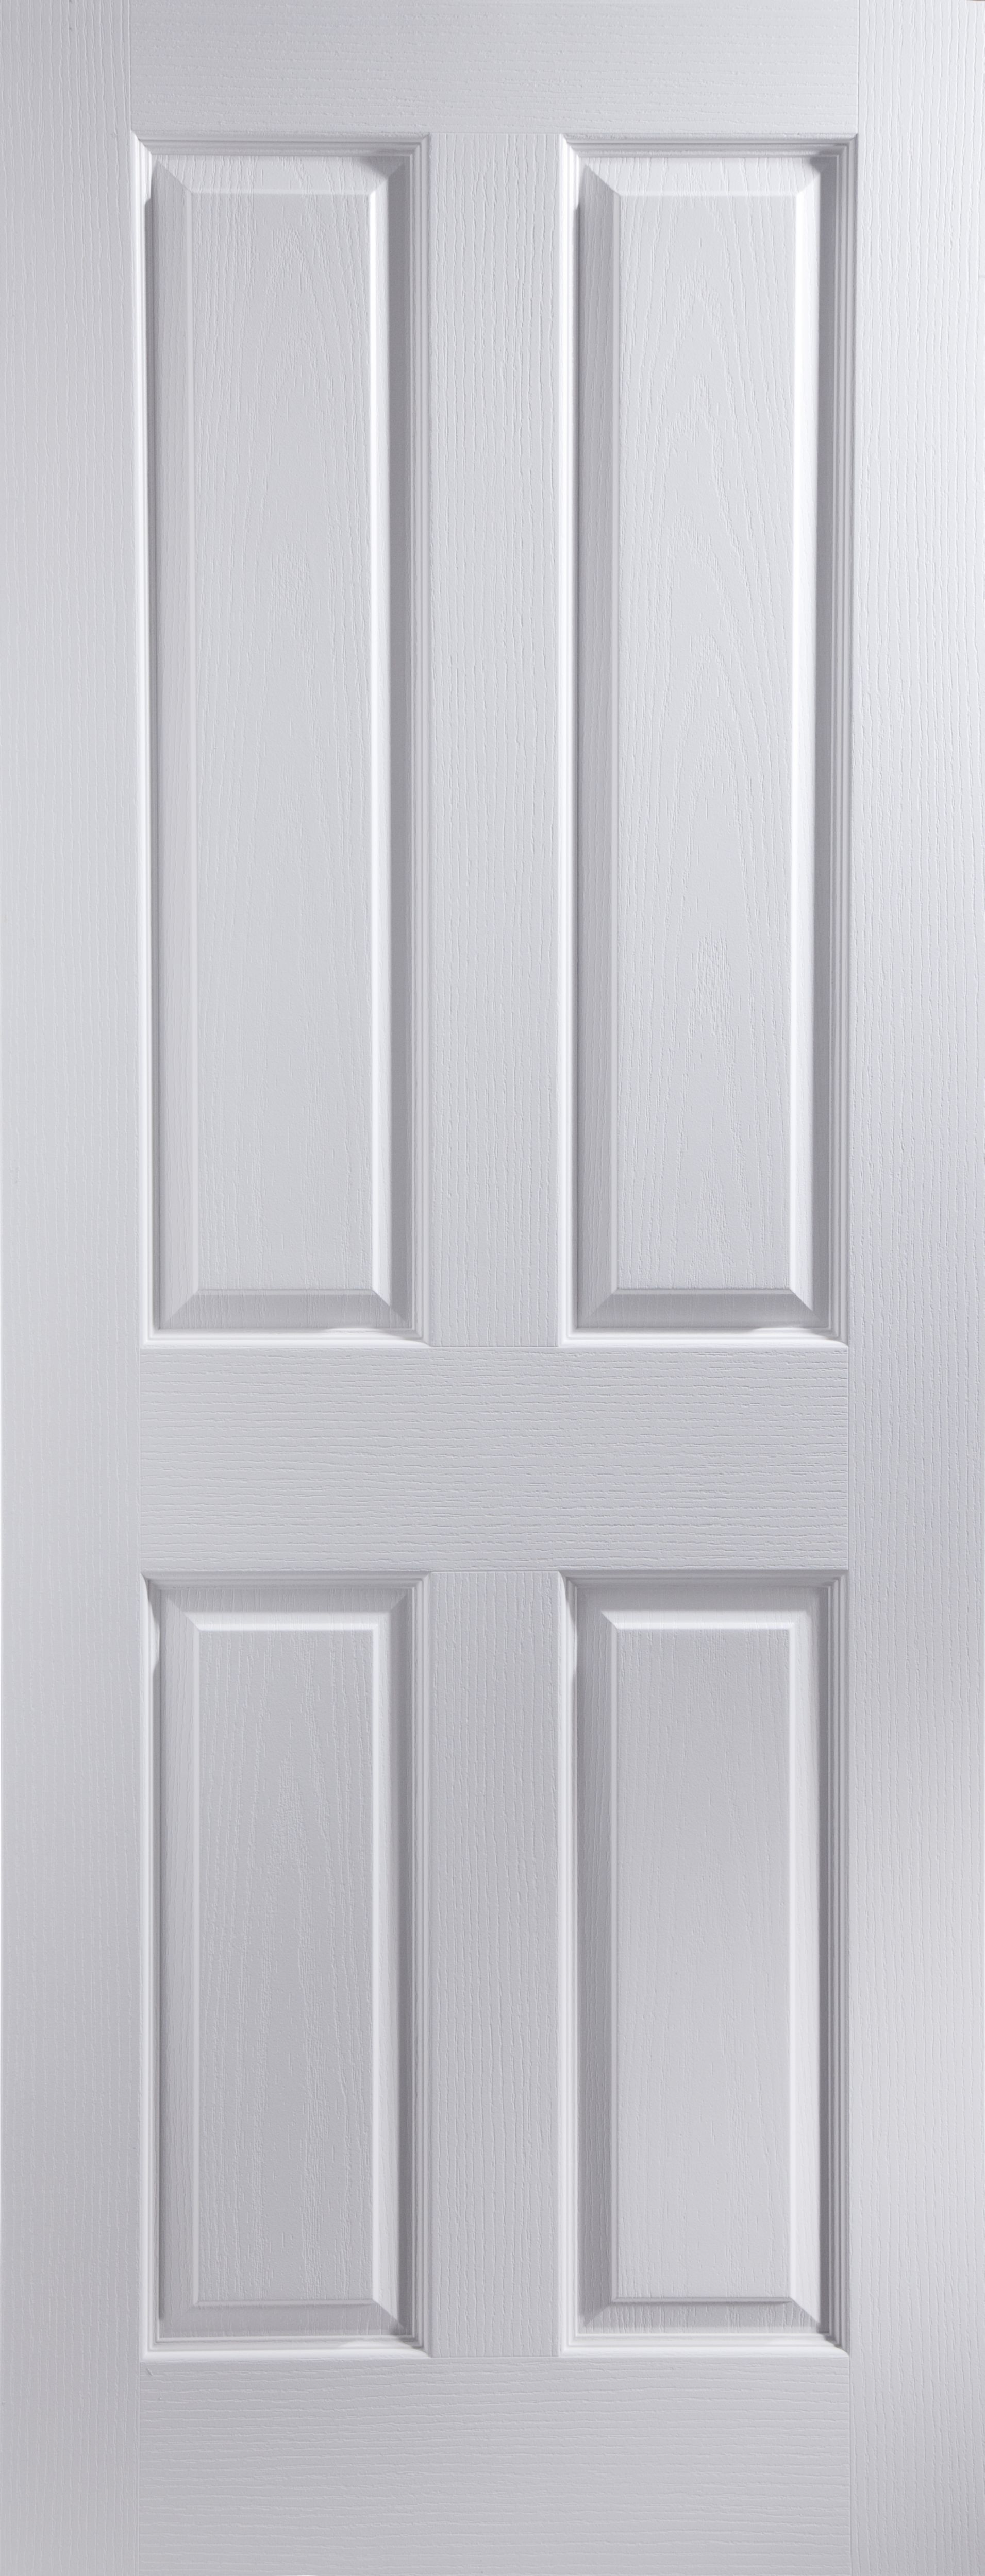 4 panel interior doors white        <h3 class=